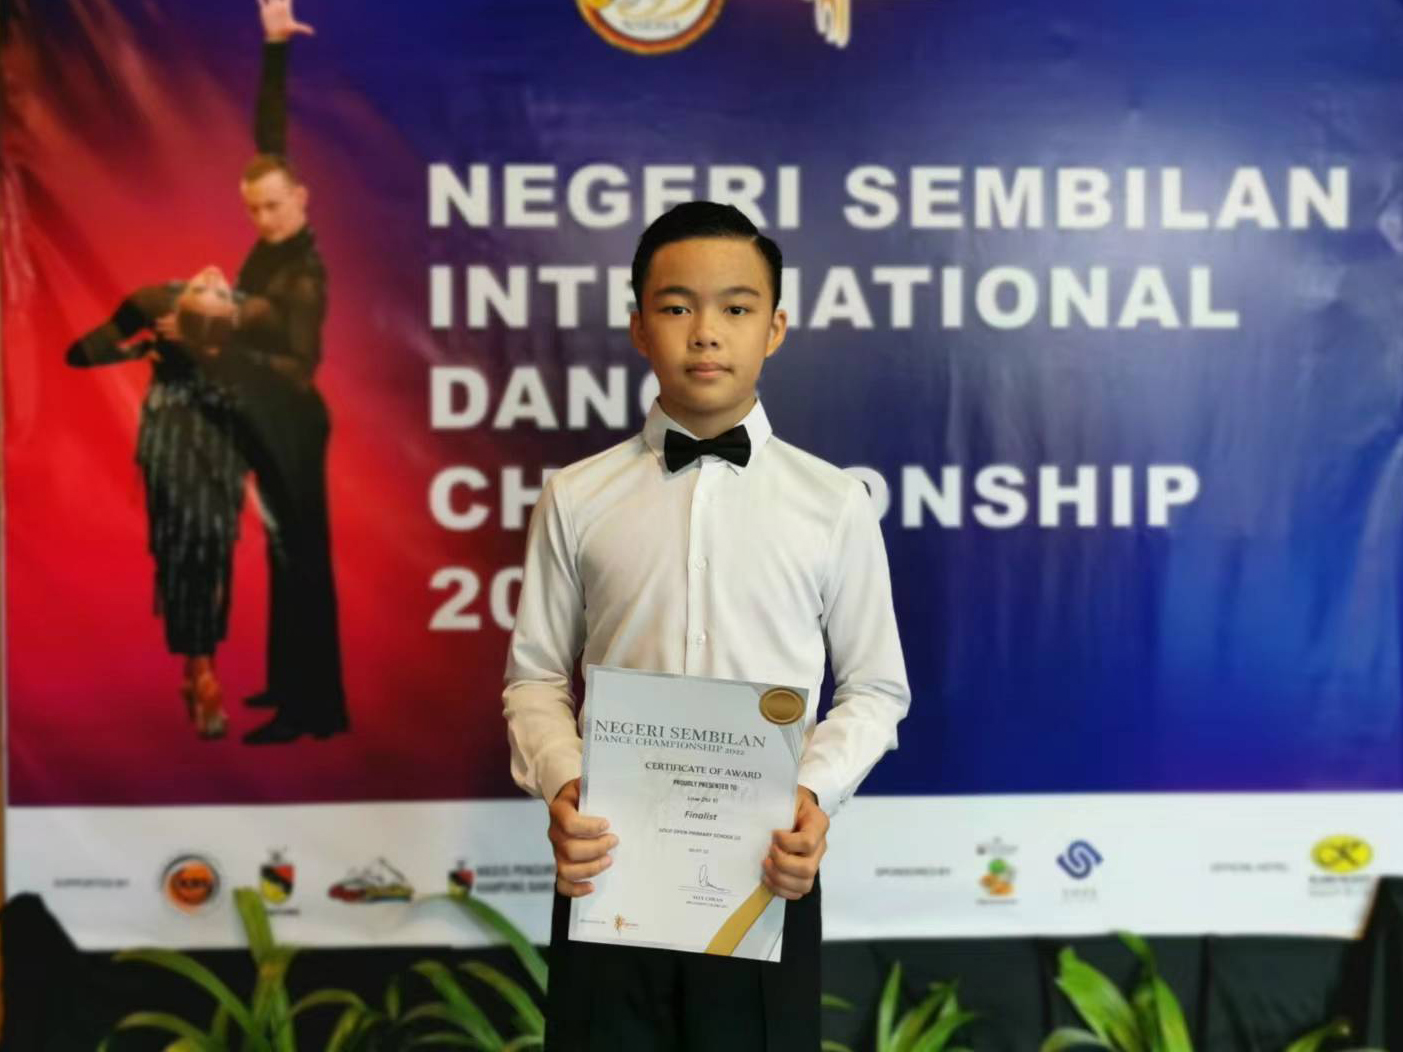 International Dance Championship